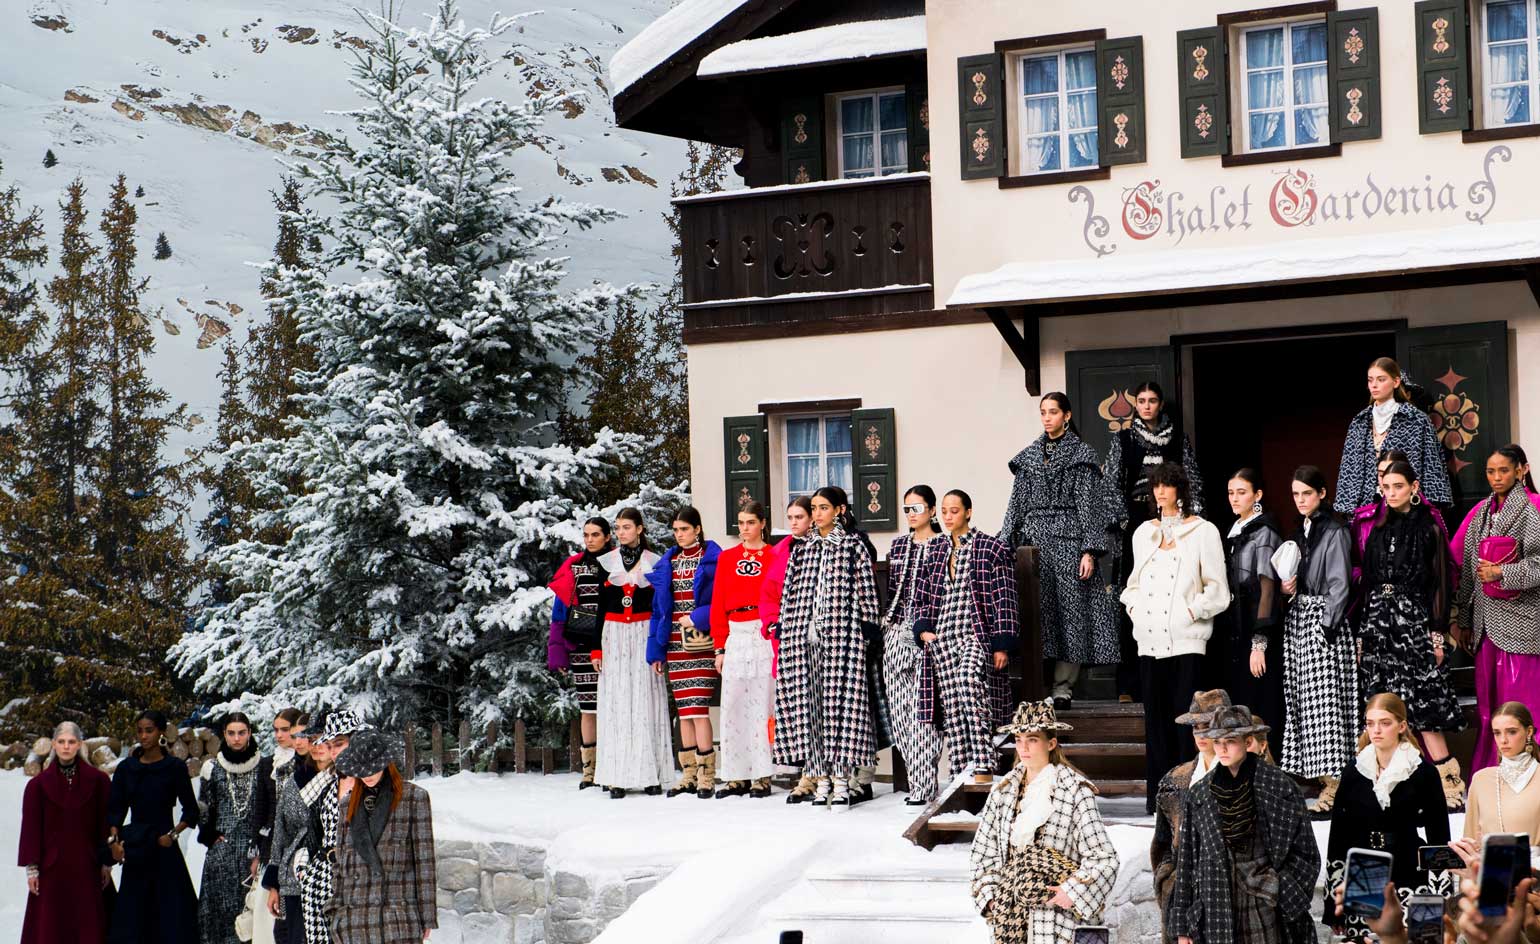 Karl Lagerfeld's Last Chanel Show is a Snowy Winter Wonderland